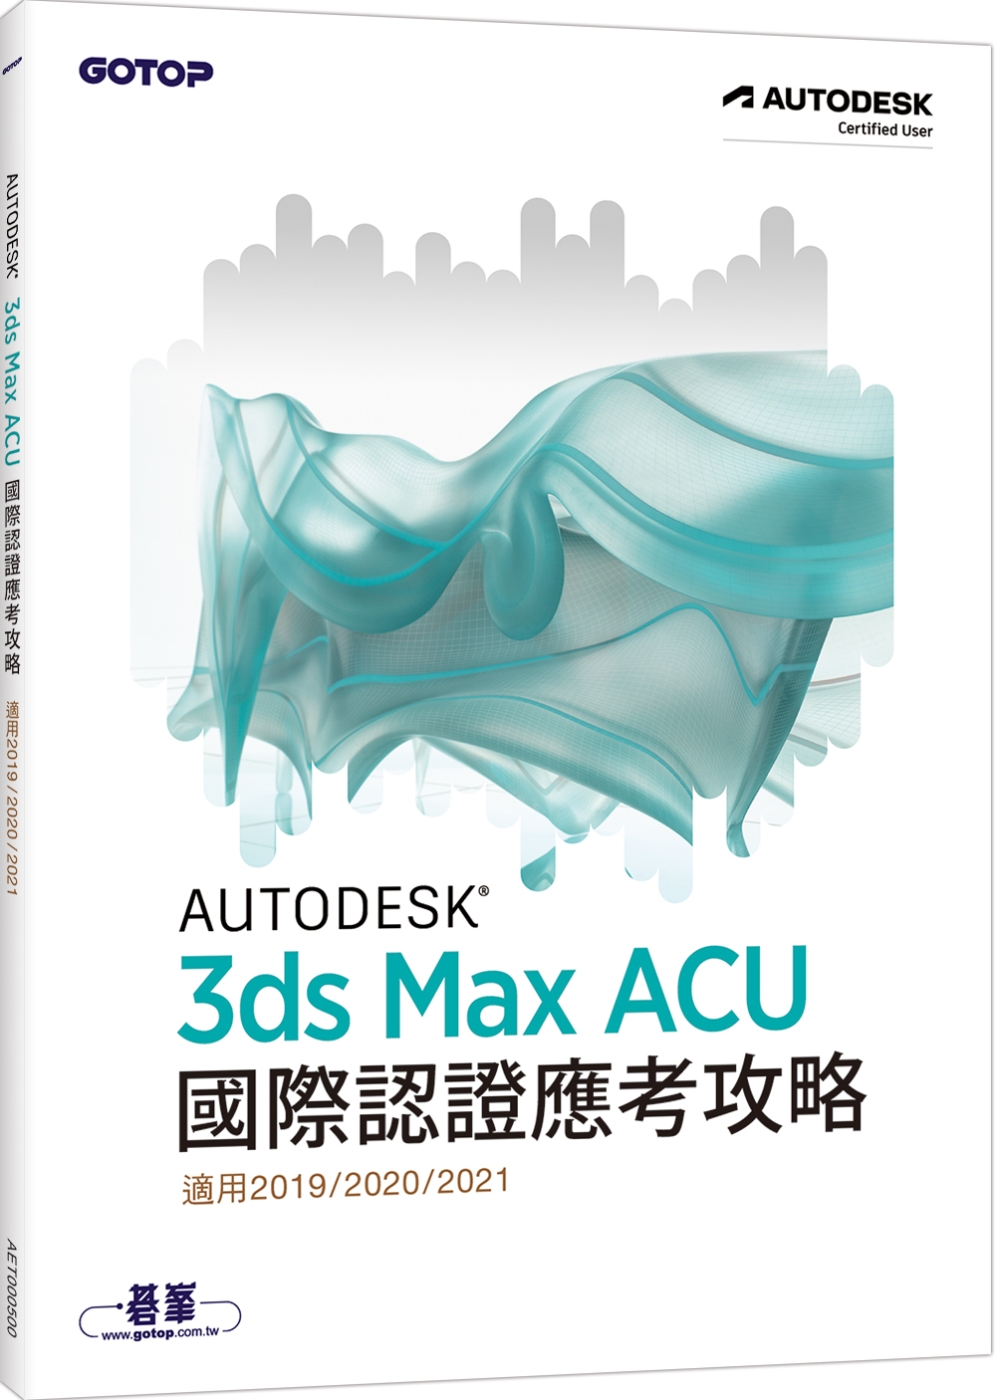 Autodesk 3ds Max ACU 國際認證應考攻略 (適用2019/2020/2021)